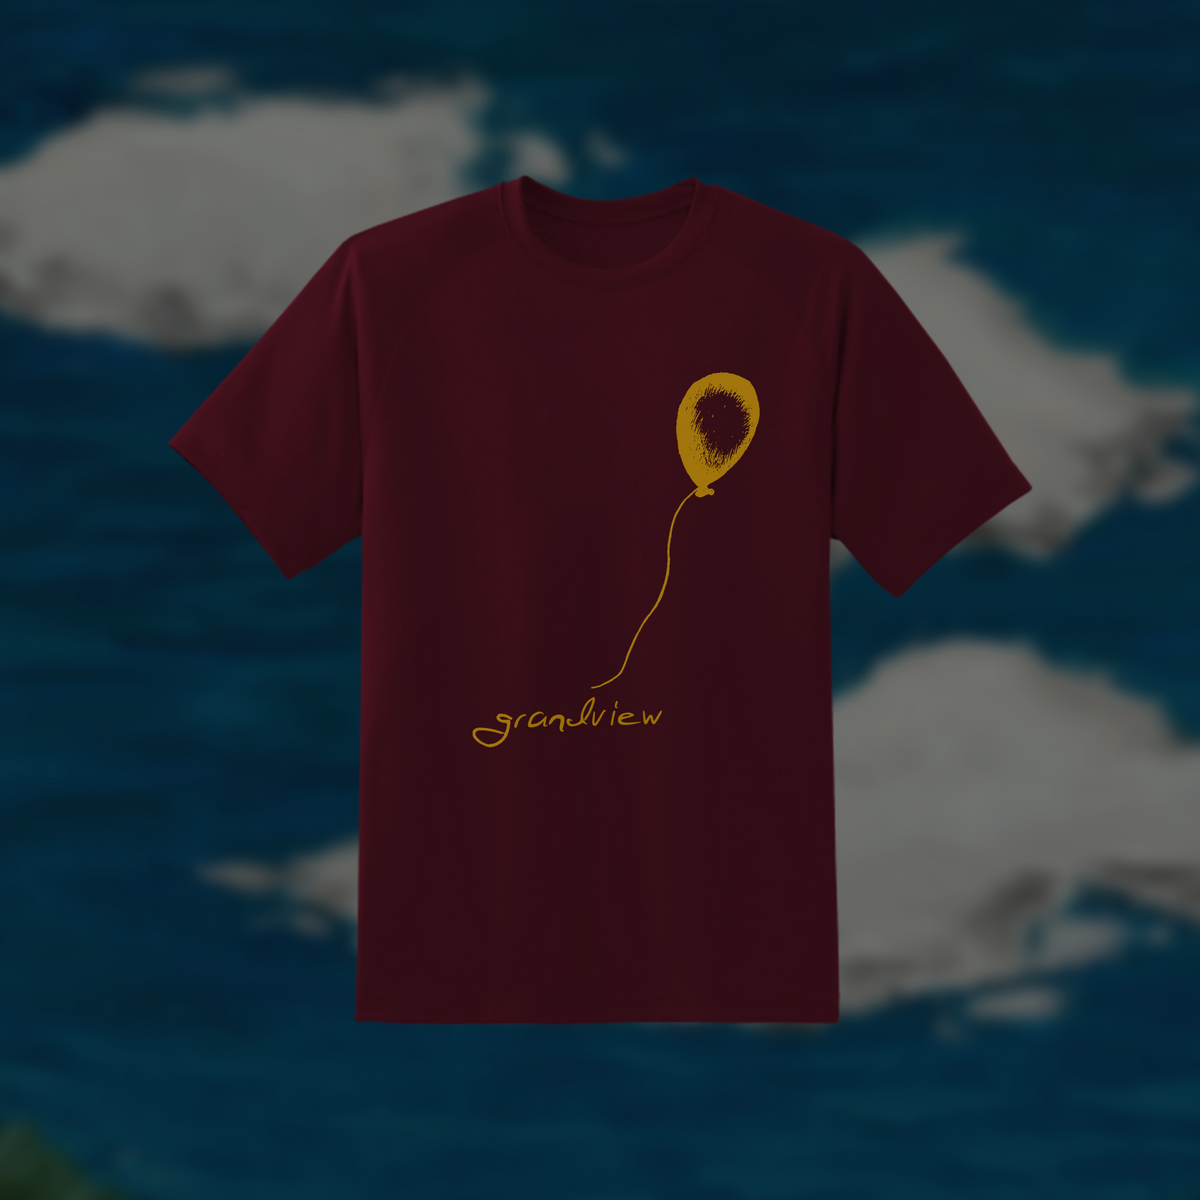 Grandview - Balloon Shirt